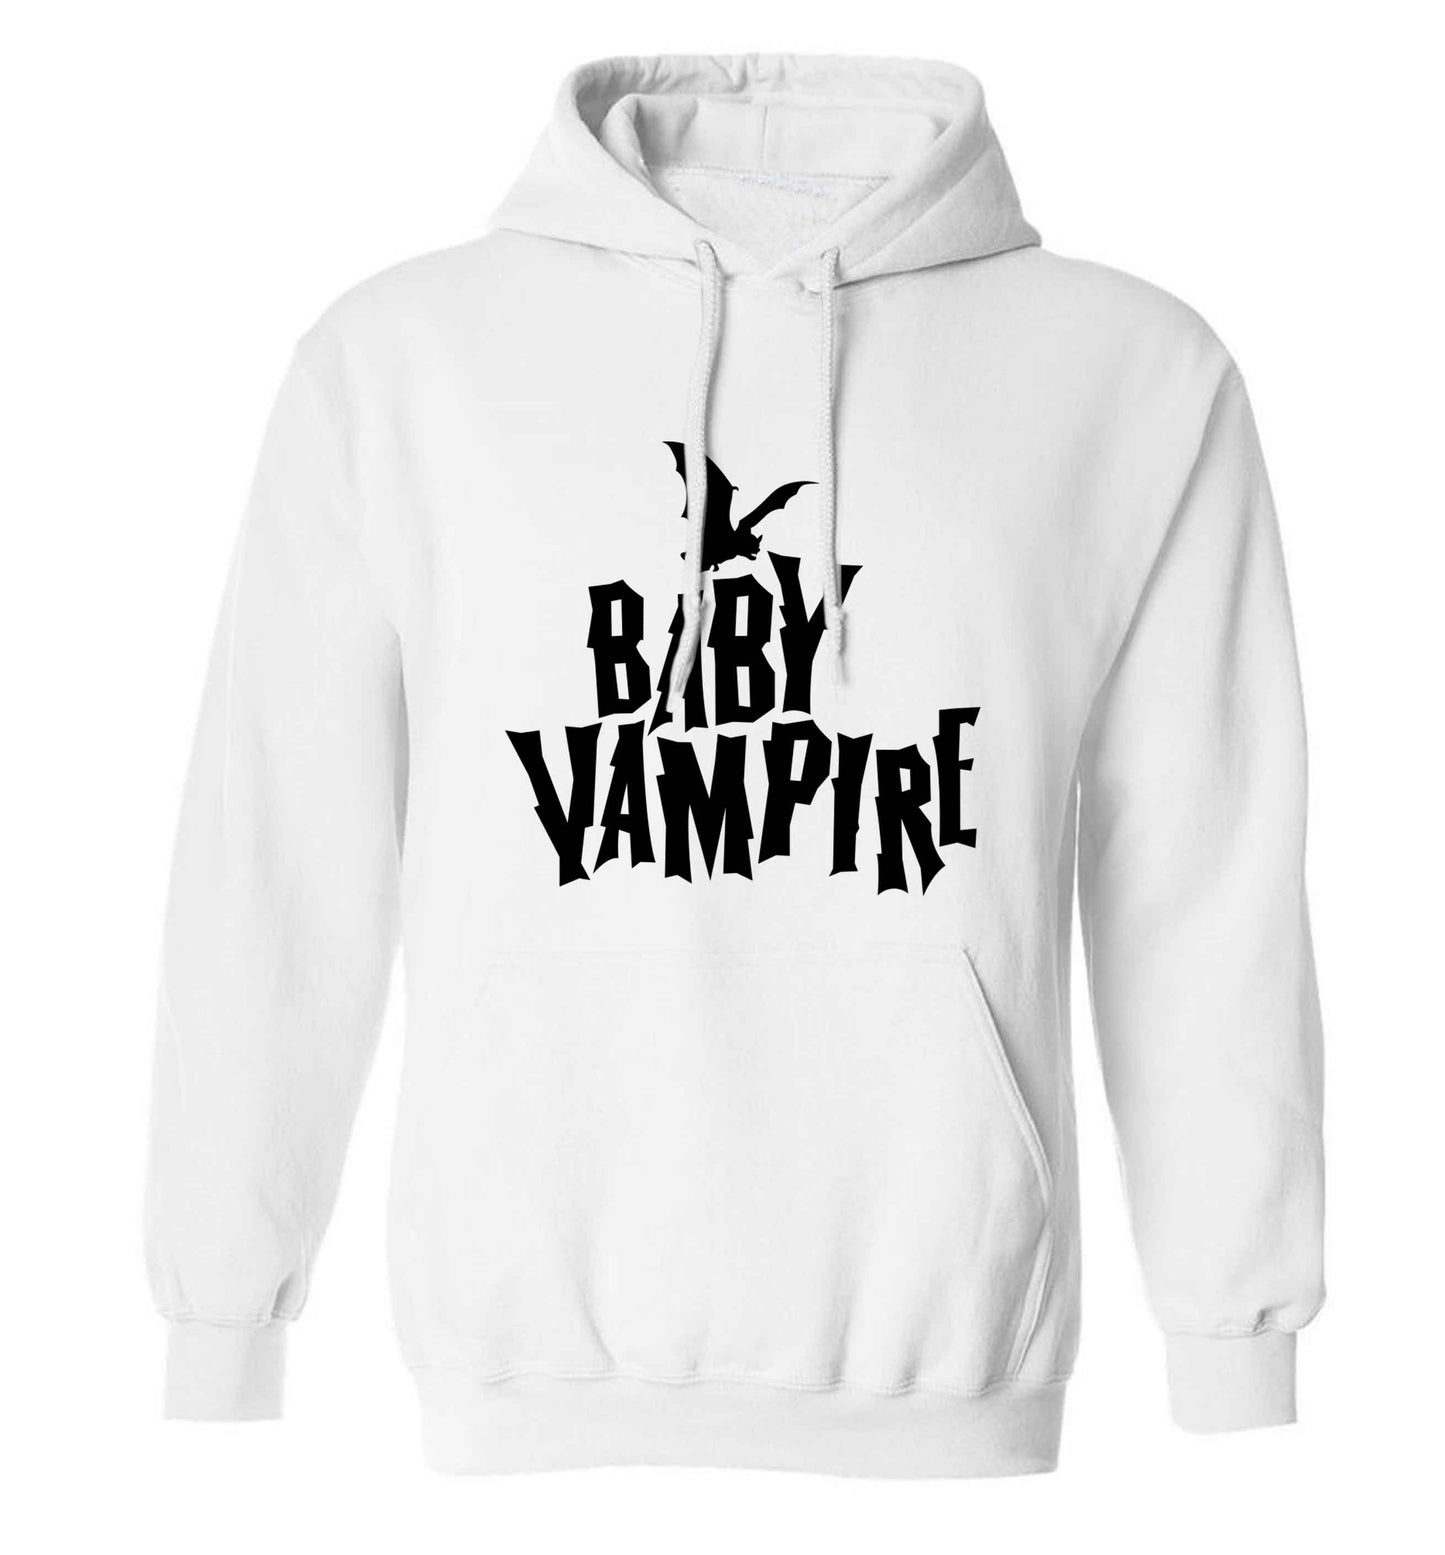 Baby vampire adults unisex white hoodie 2XL